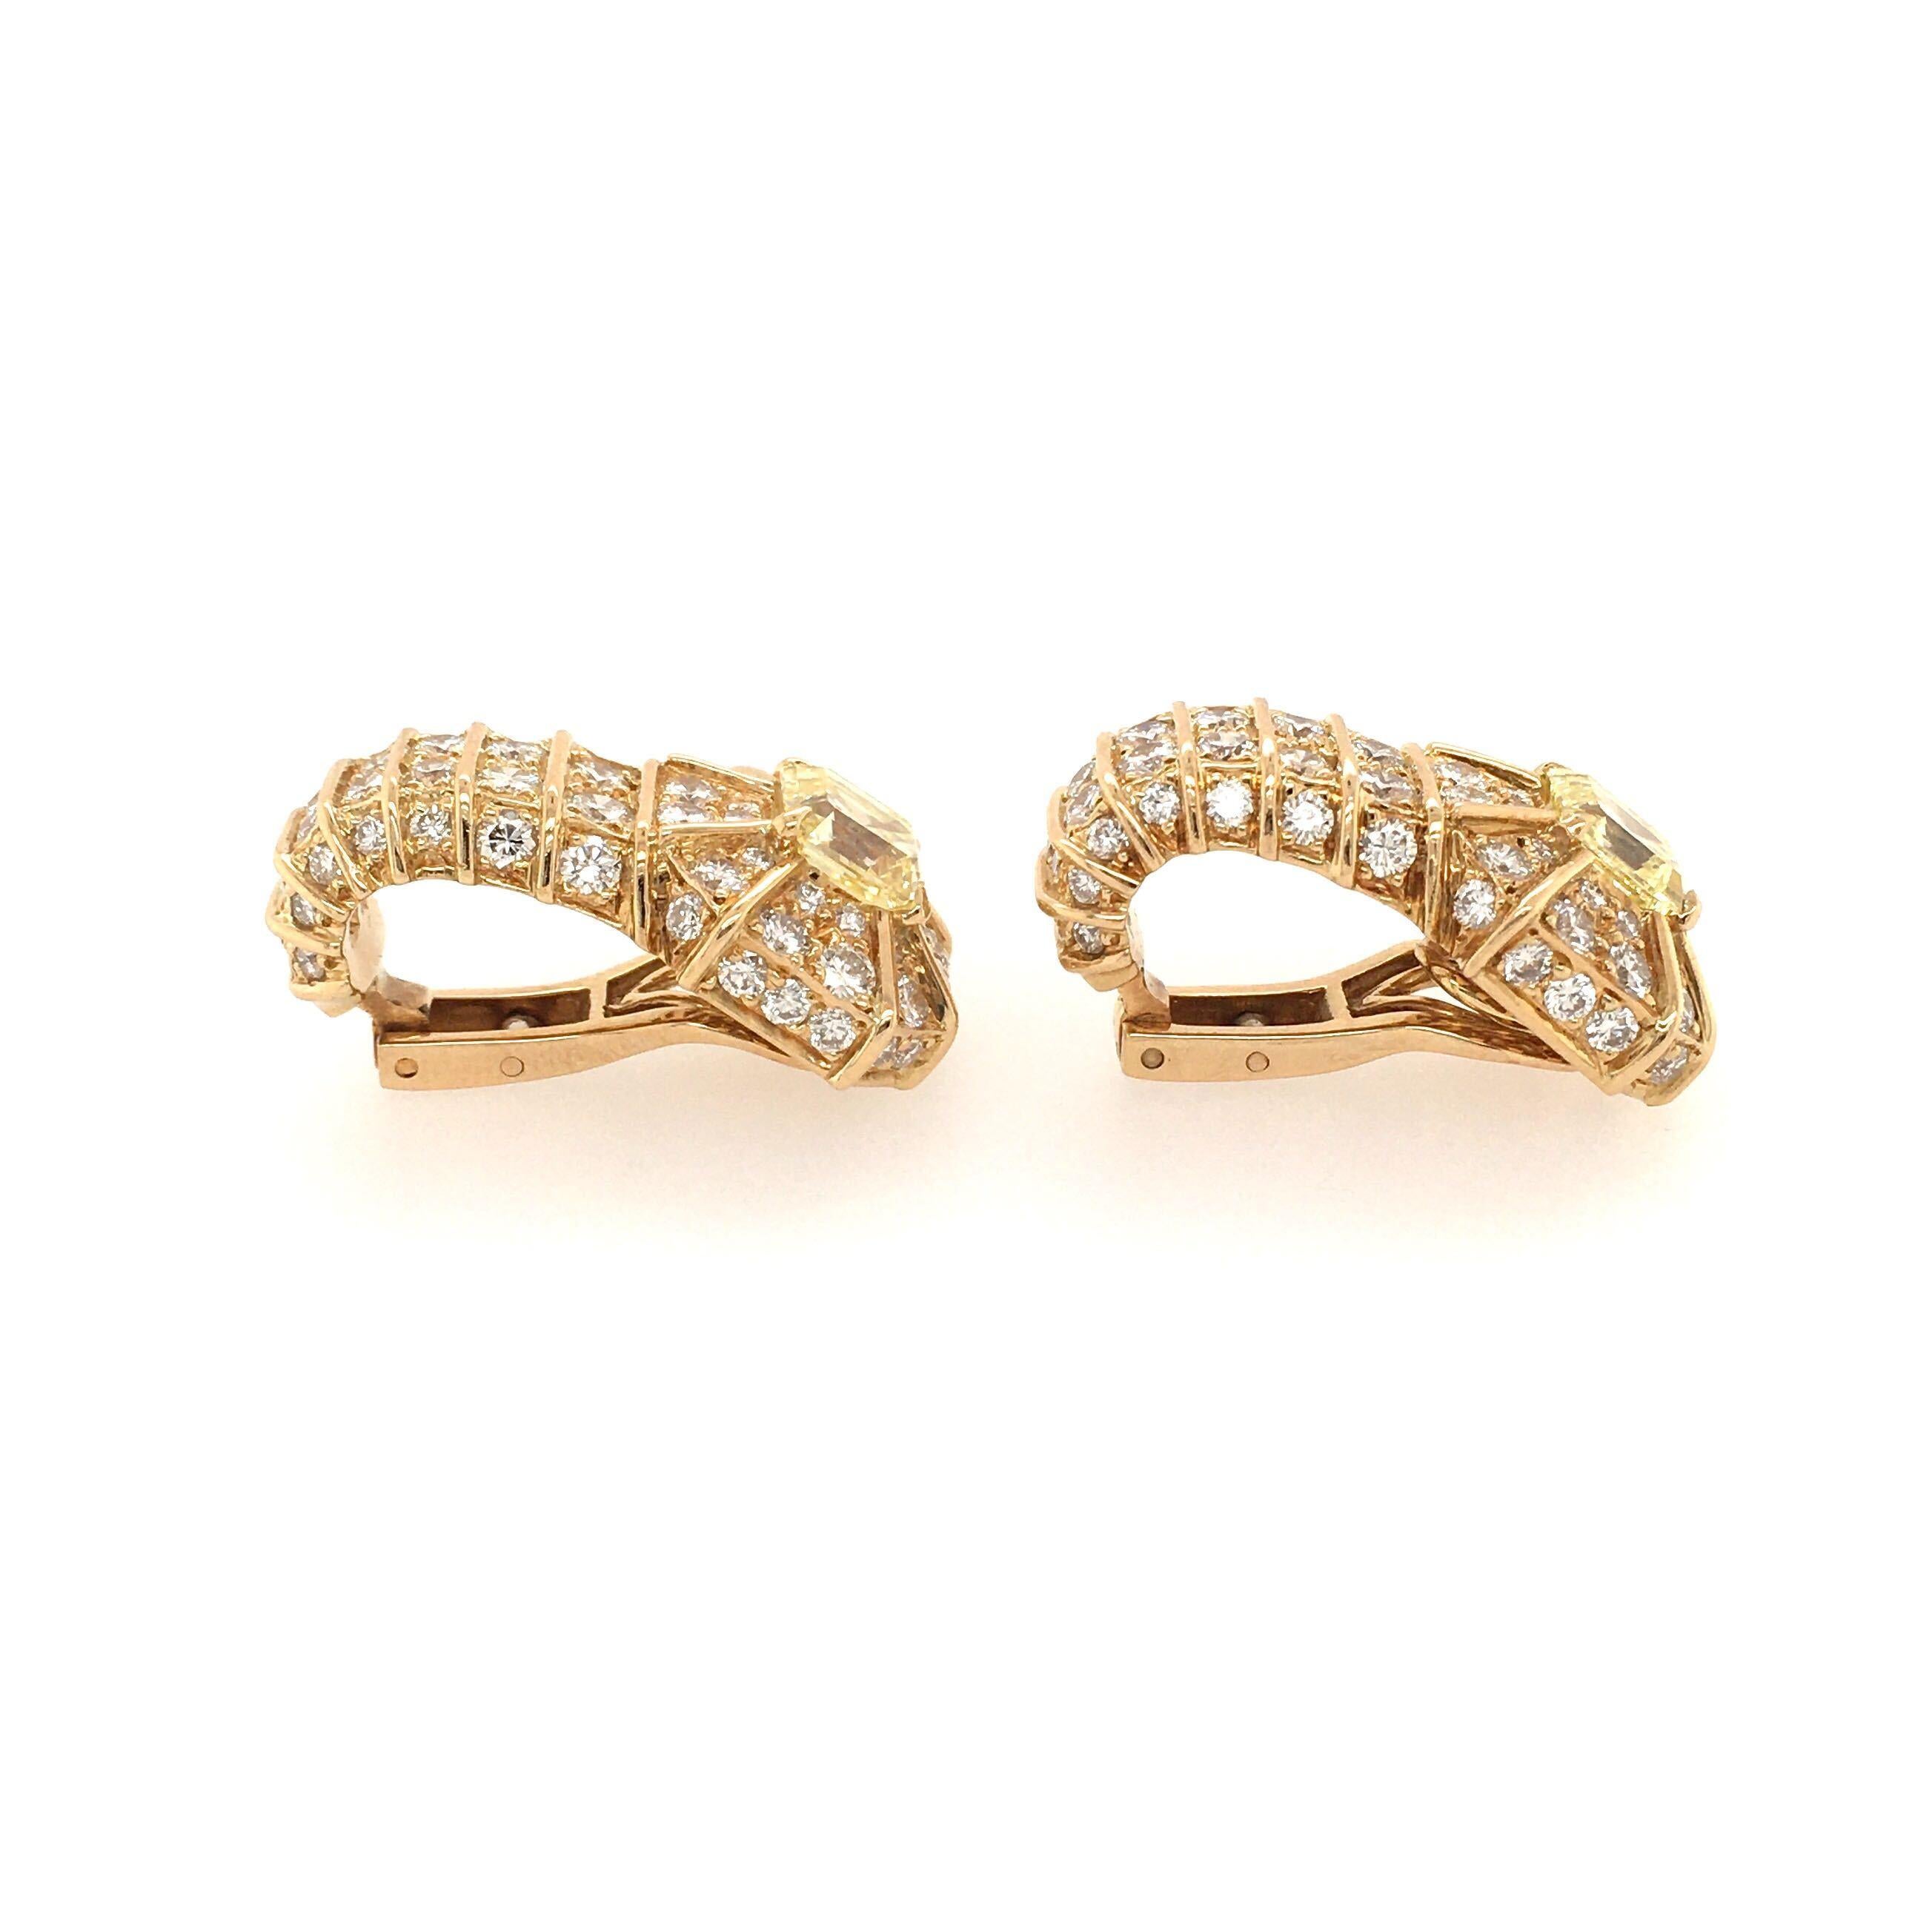 Emerald Cut Fancy Yellow Diamond and Diamond Earrings